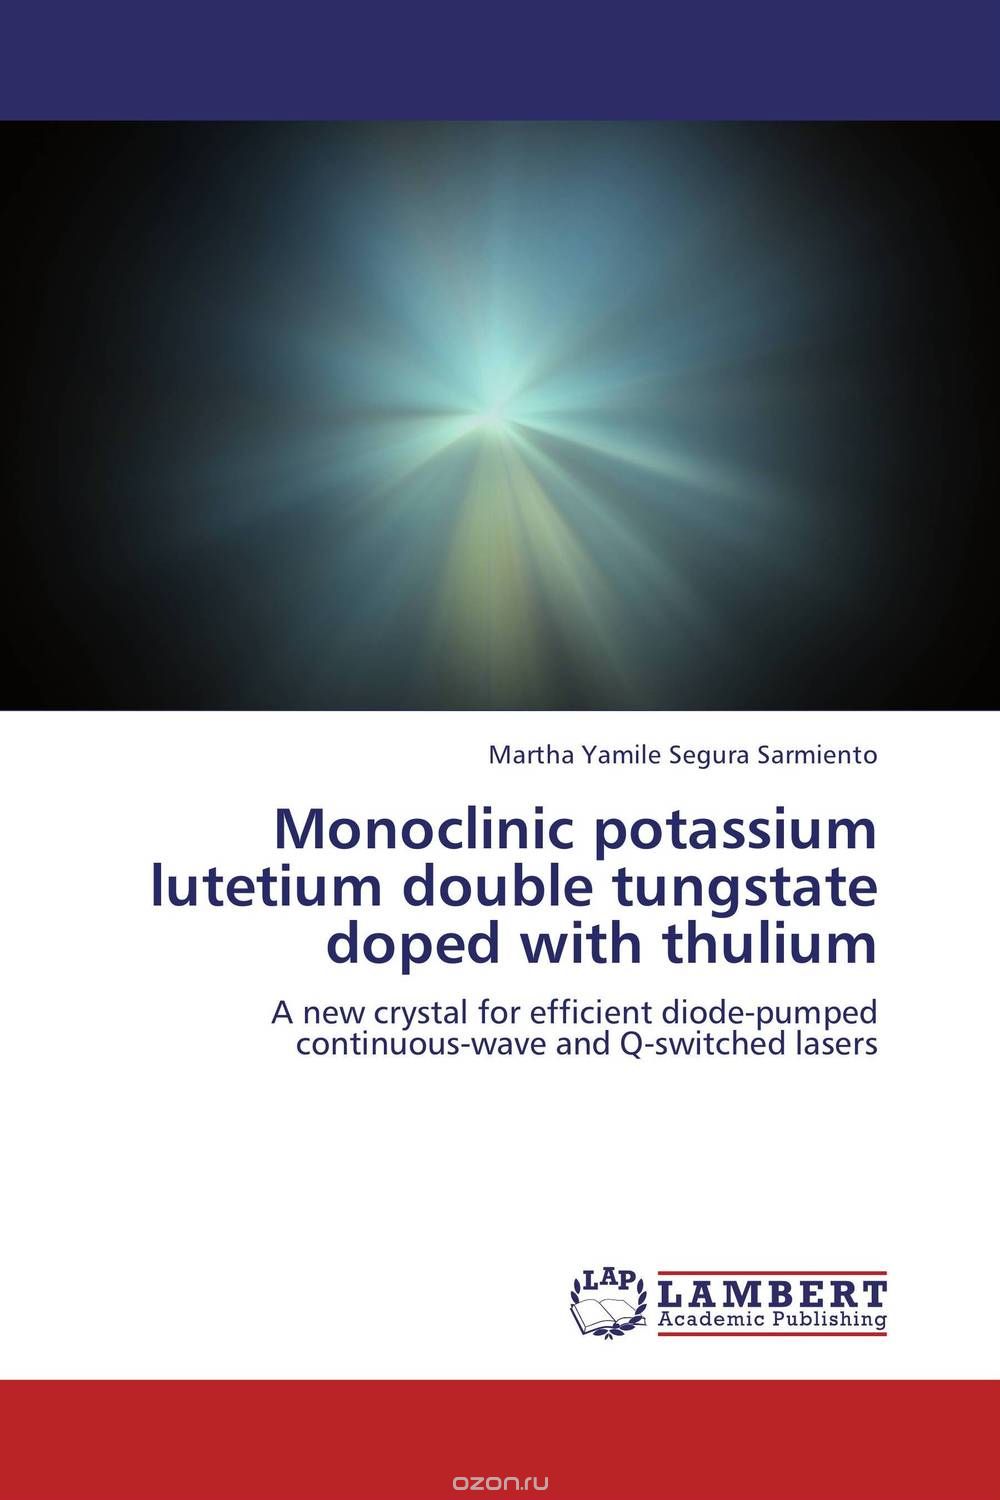 Скачать книгу "Monoclinic potassium lutetium double tungstate doped with thulium"